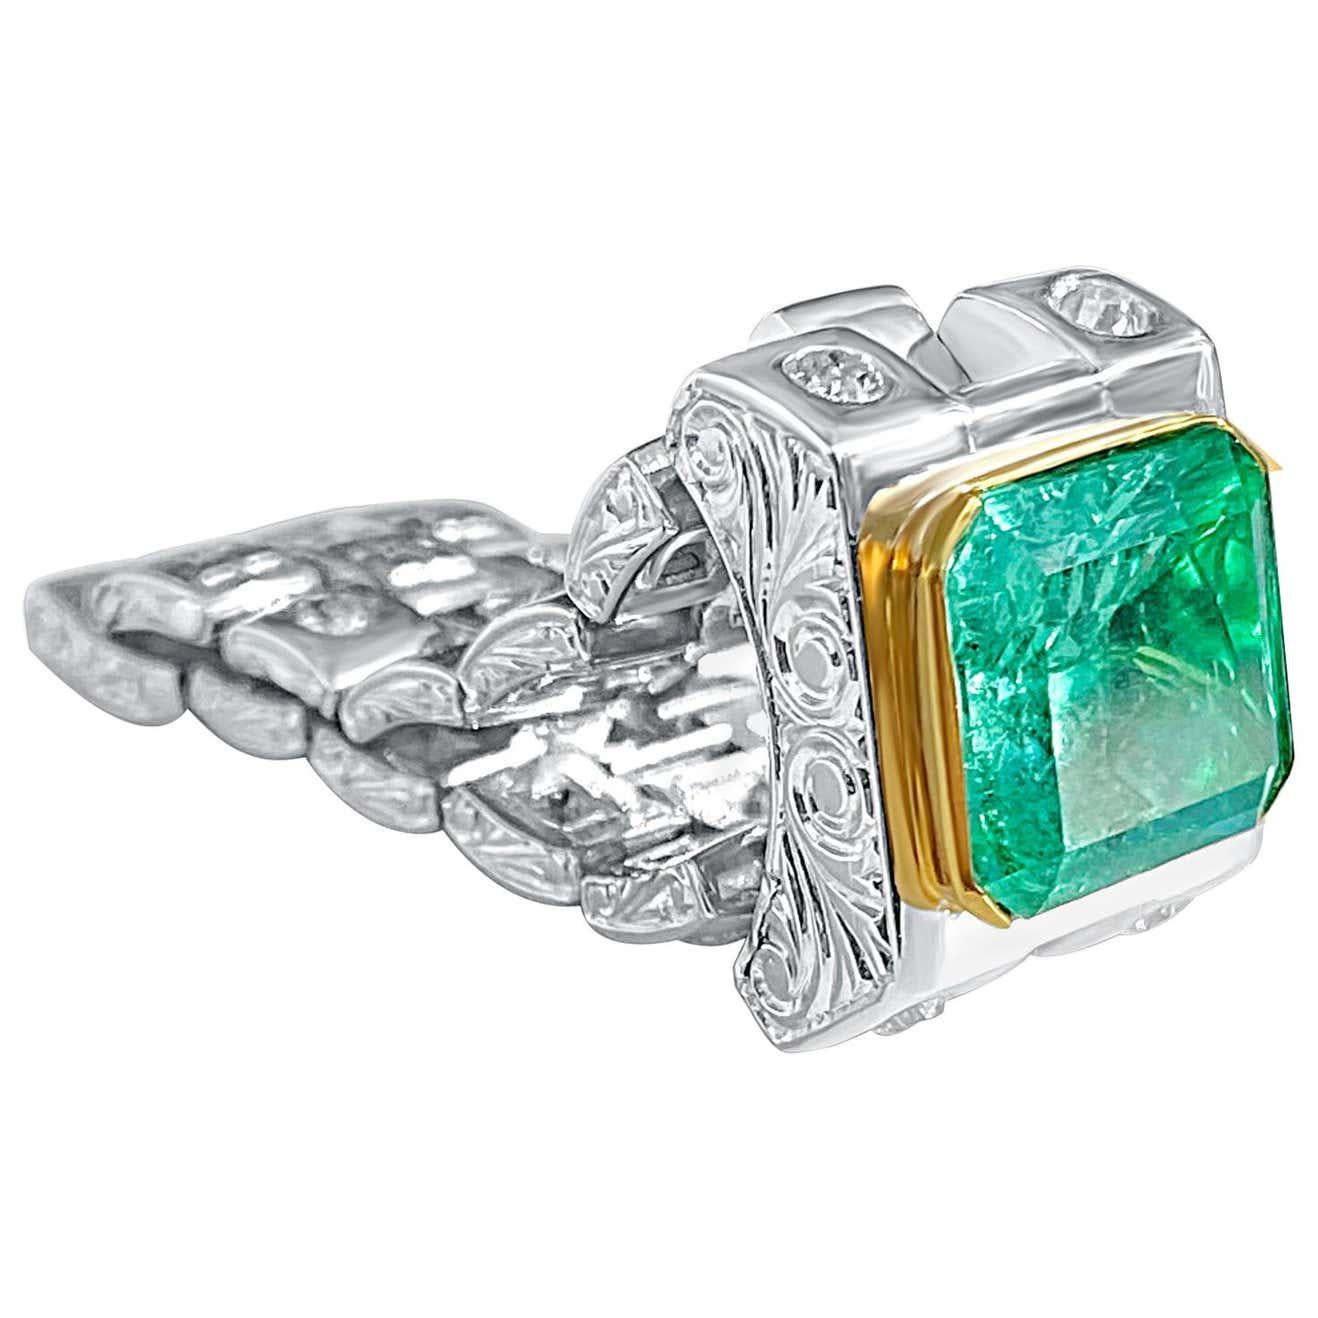 3.75 Carat Emerald-Cut Colombian Emerald and White Diamond Platinum Men's Ring